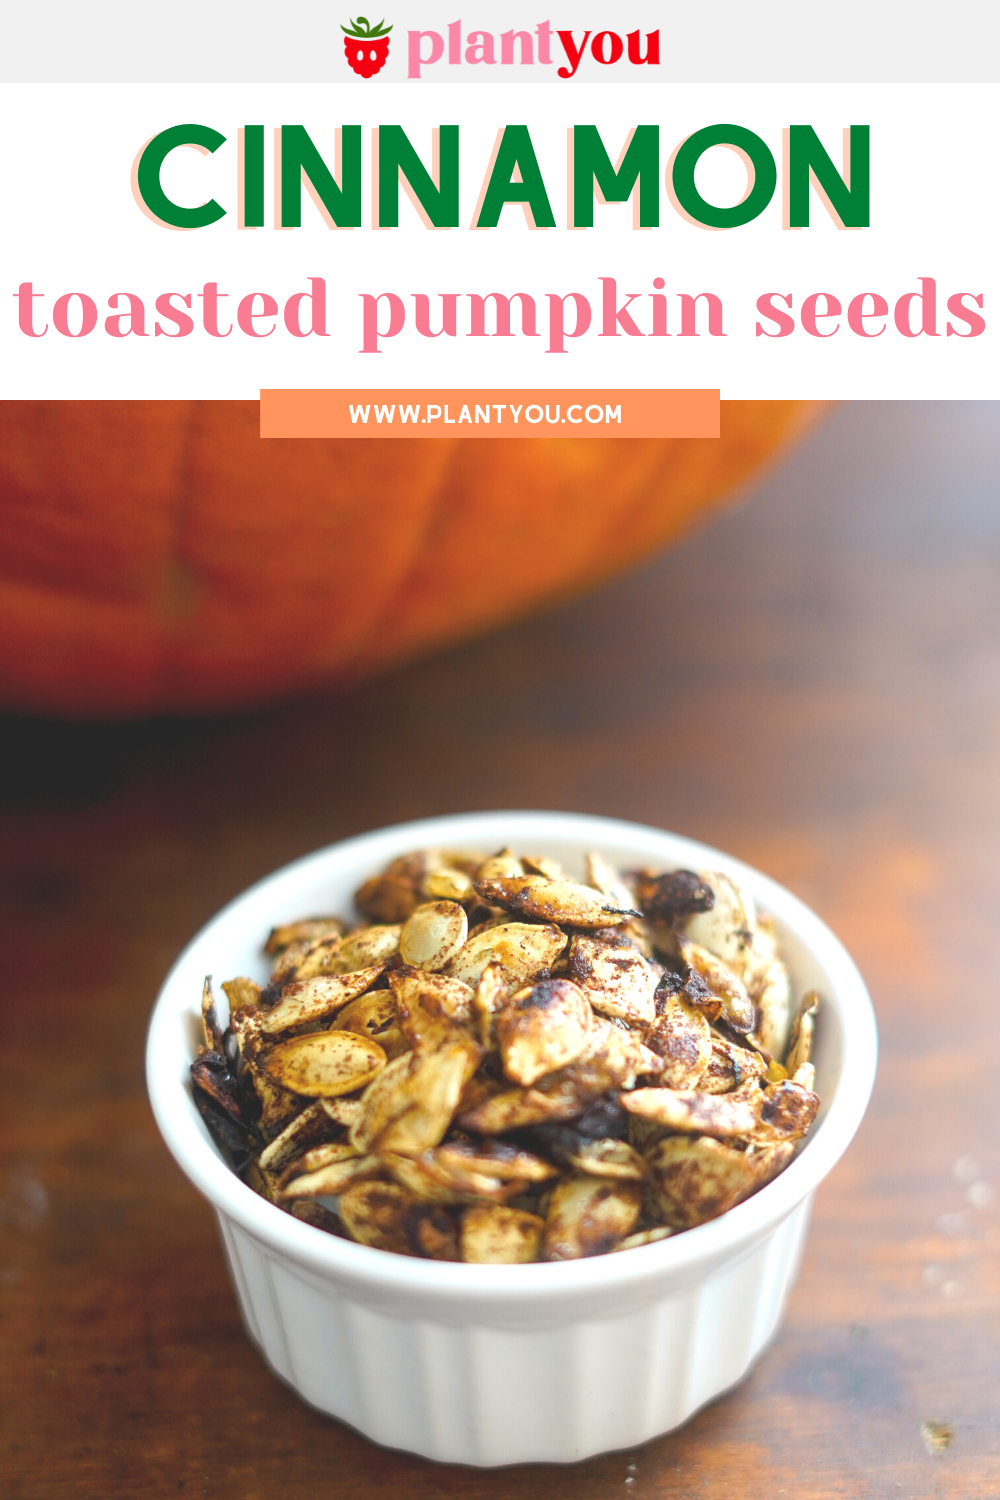 Pumpkin Seed Recipes for Vegan